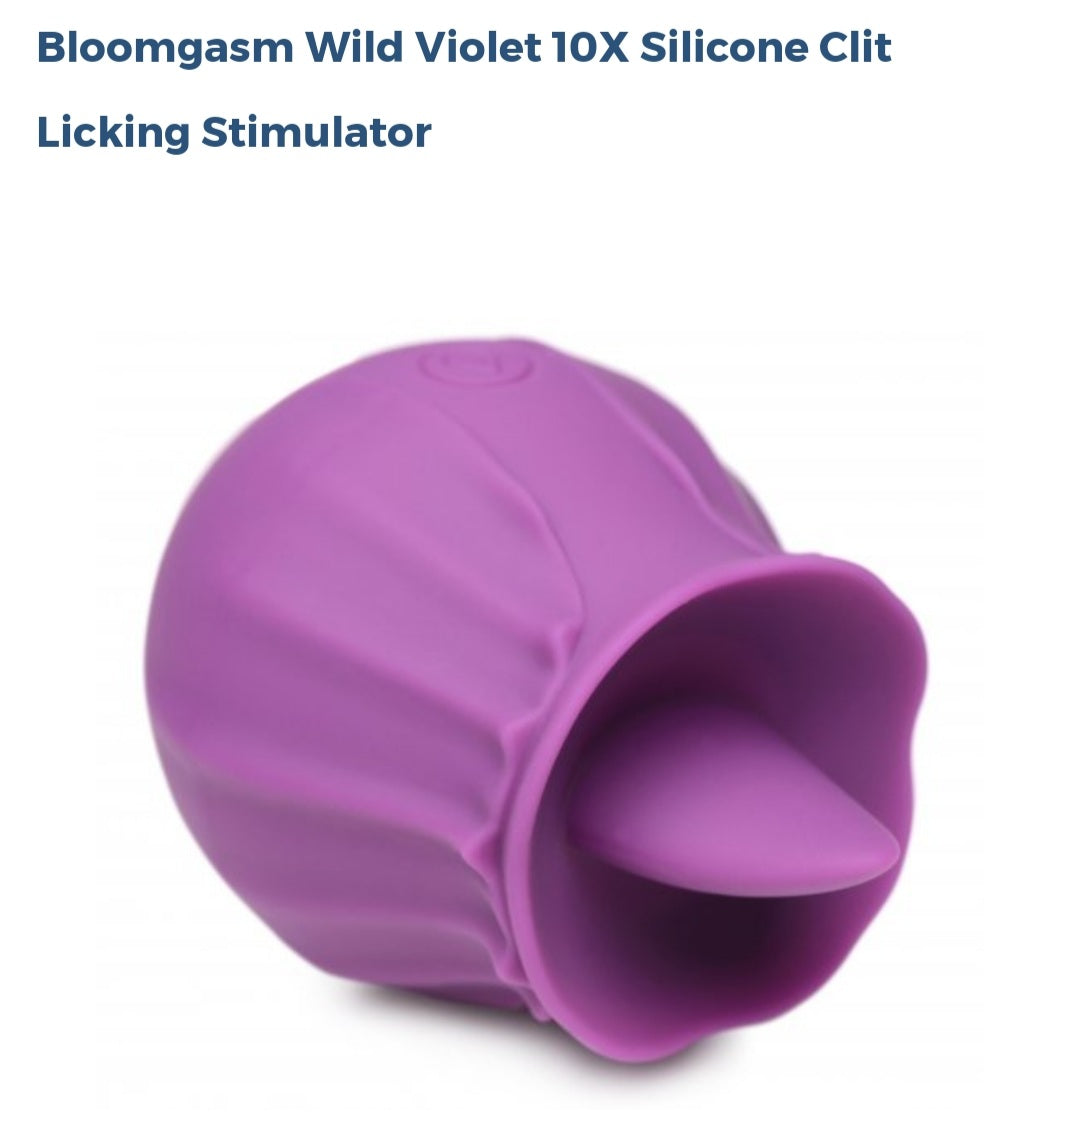 Bloomgasm Wild Violent 10X Silicone Clit Licking Stimulator